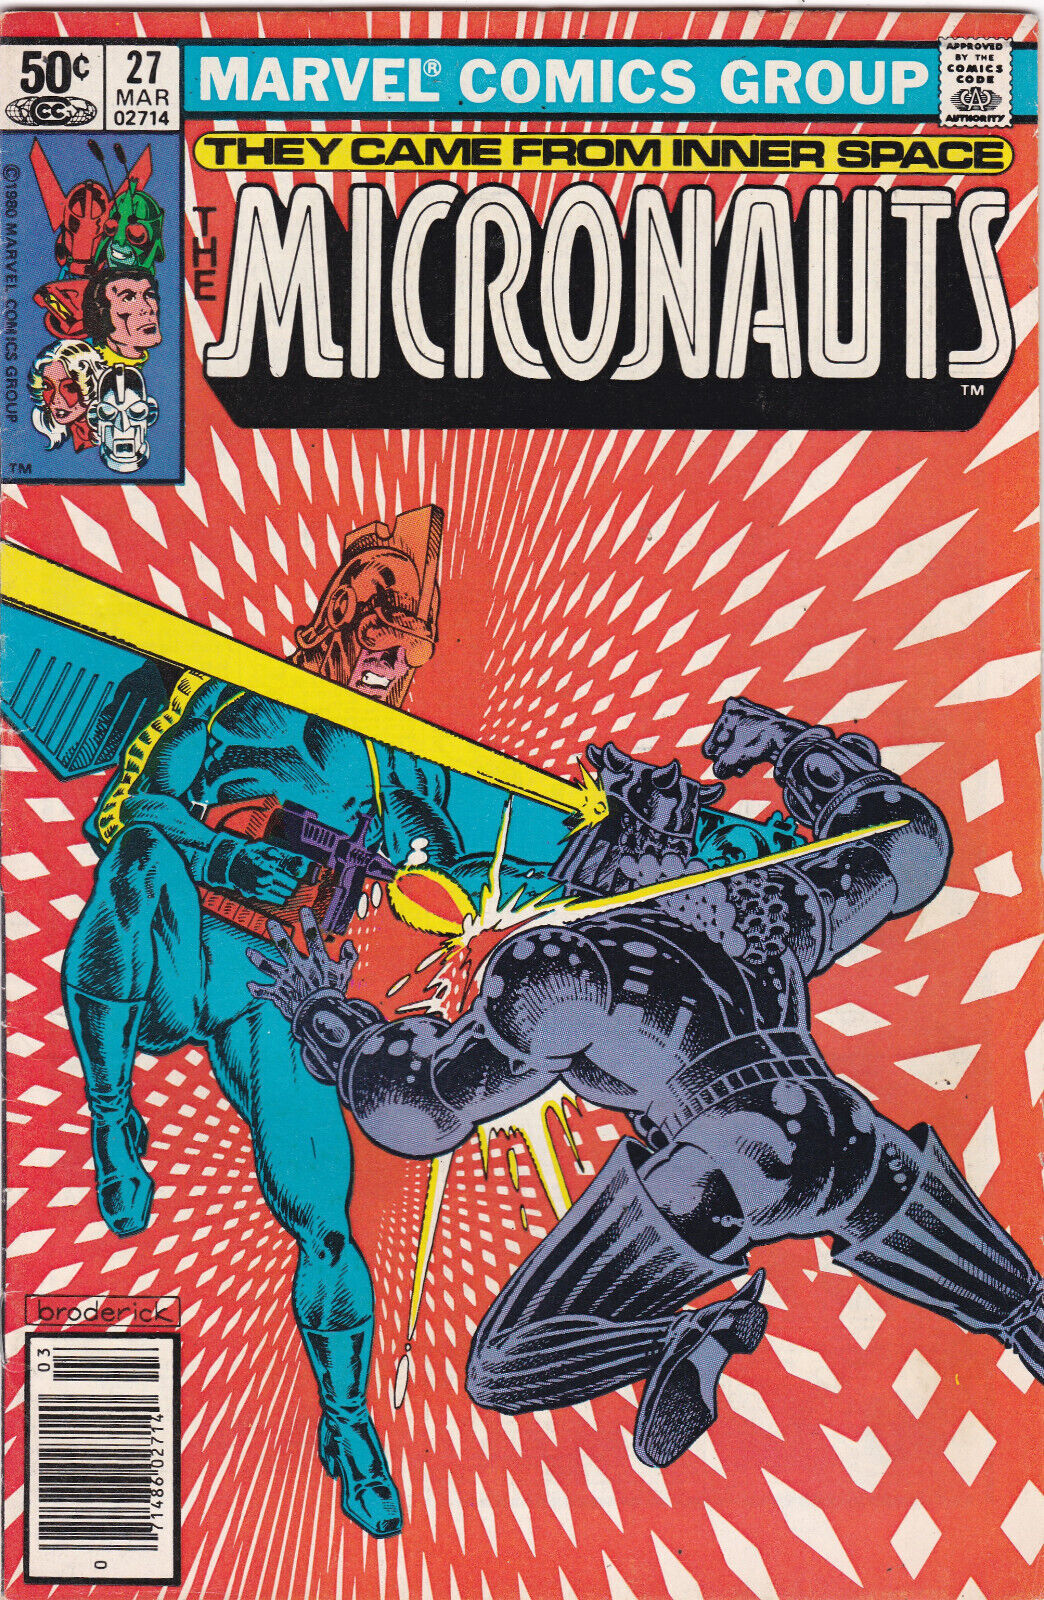 Micronauts #27, Vol. 1 (1979-1984) Marvel Comics, Newsstand